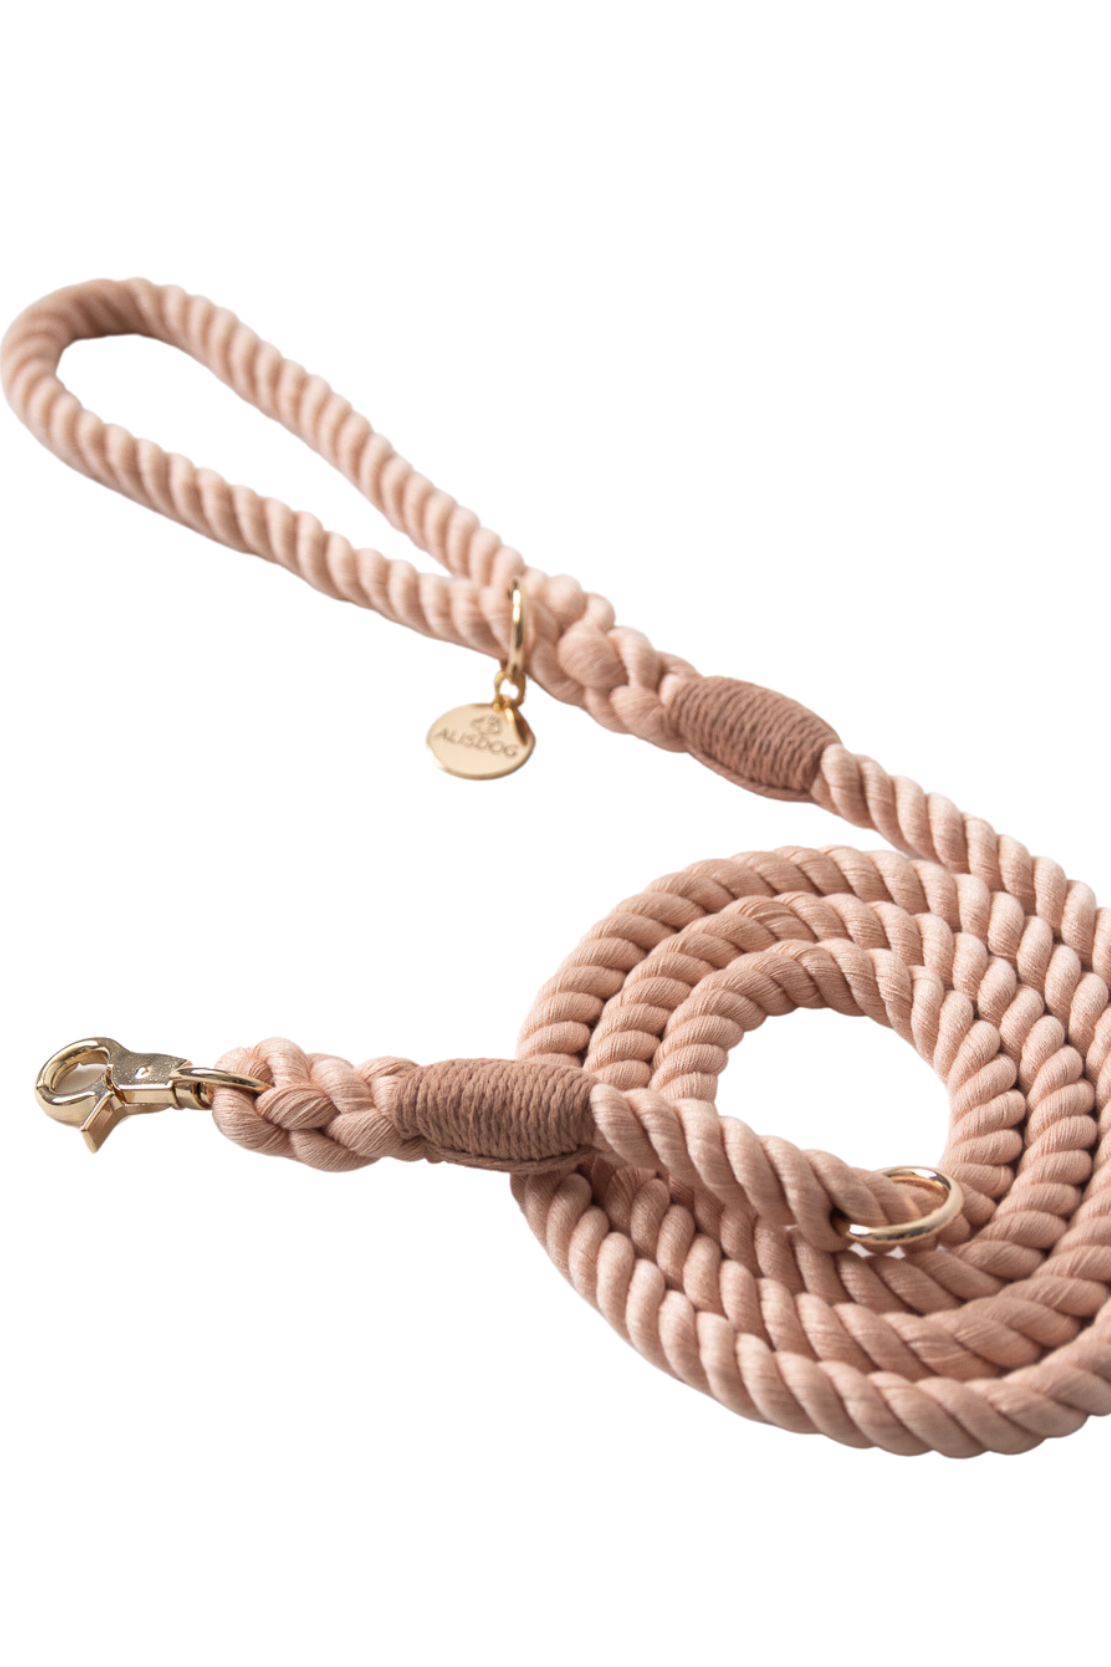 Pink Rope leash 180 cm long